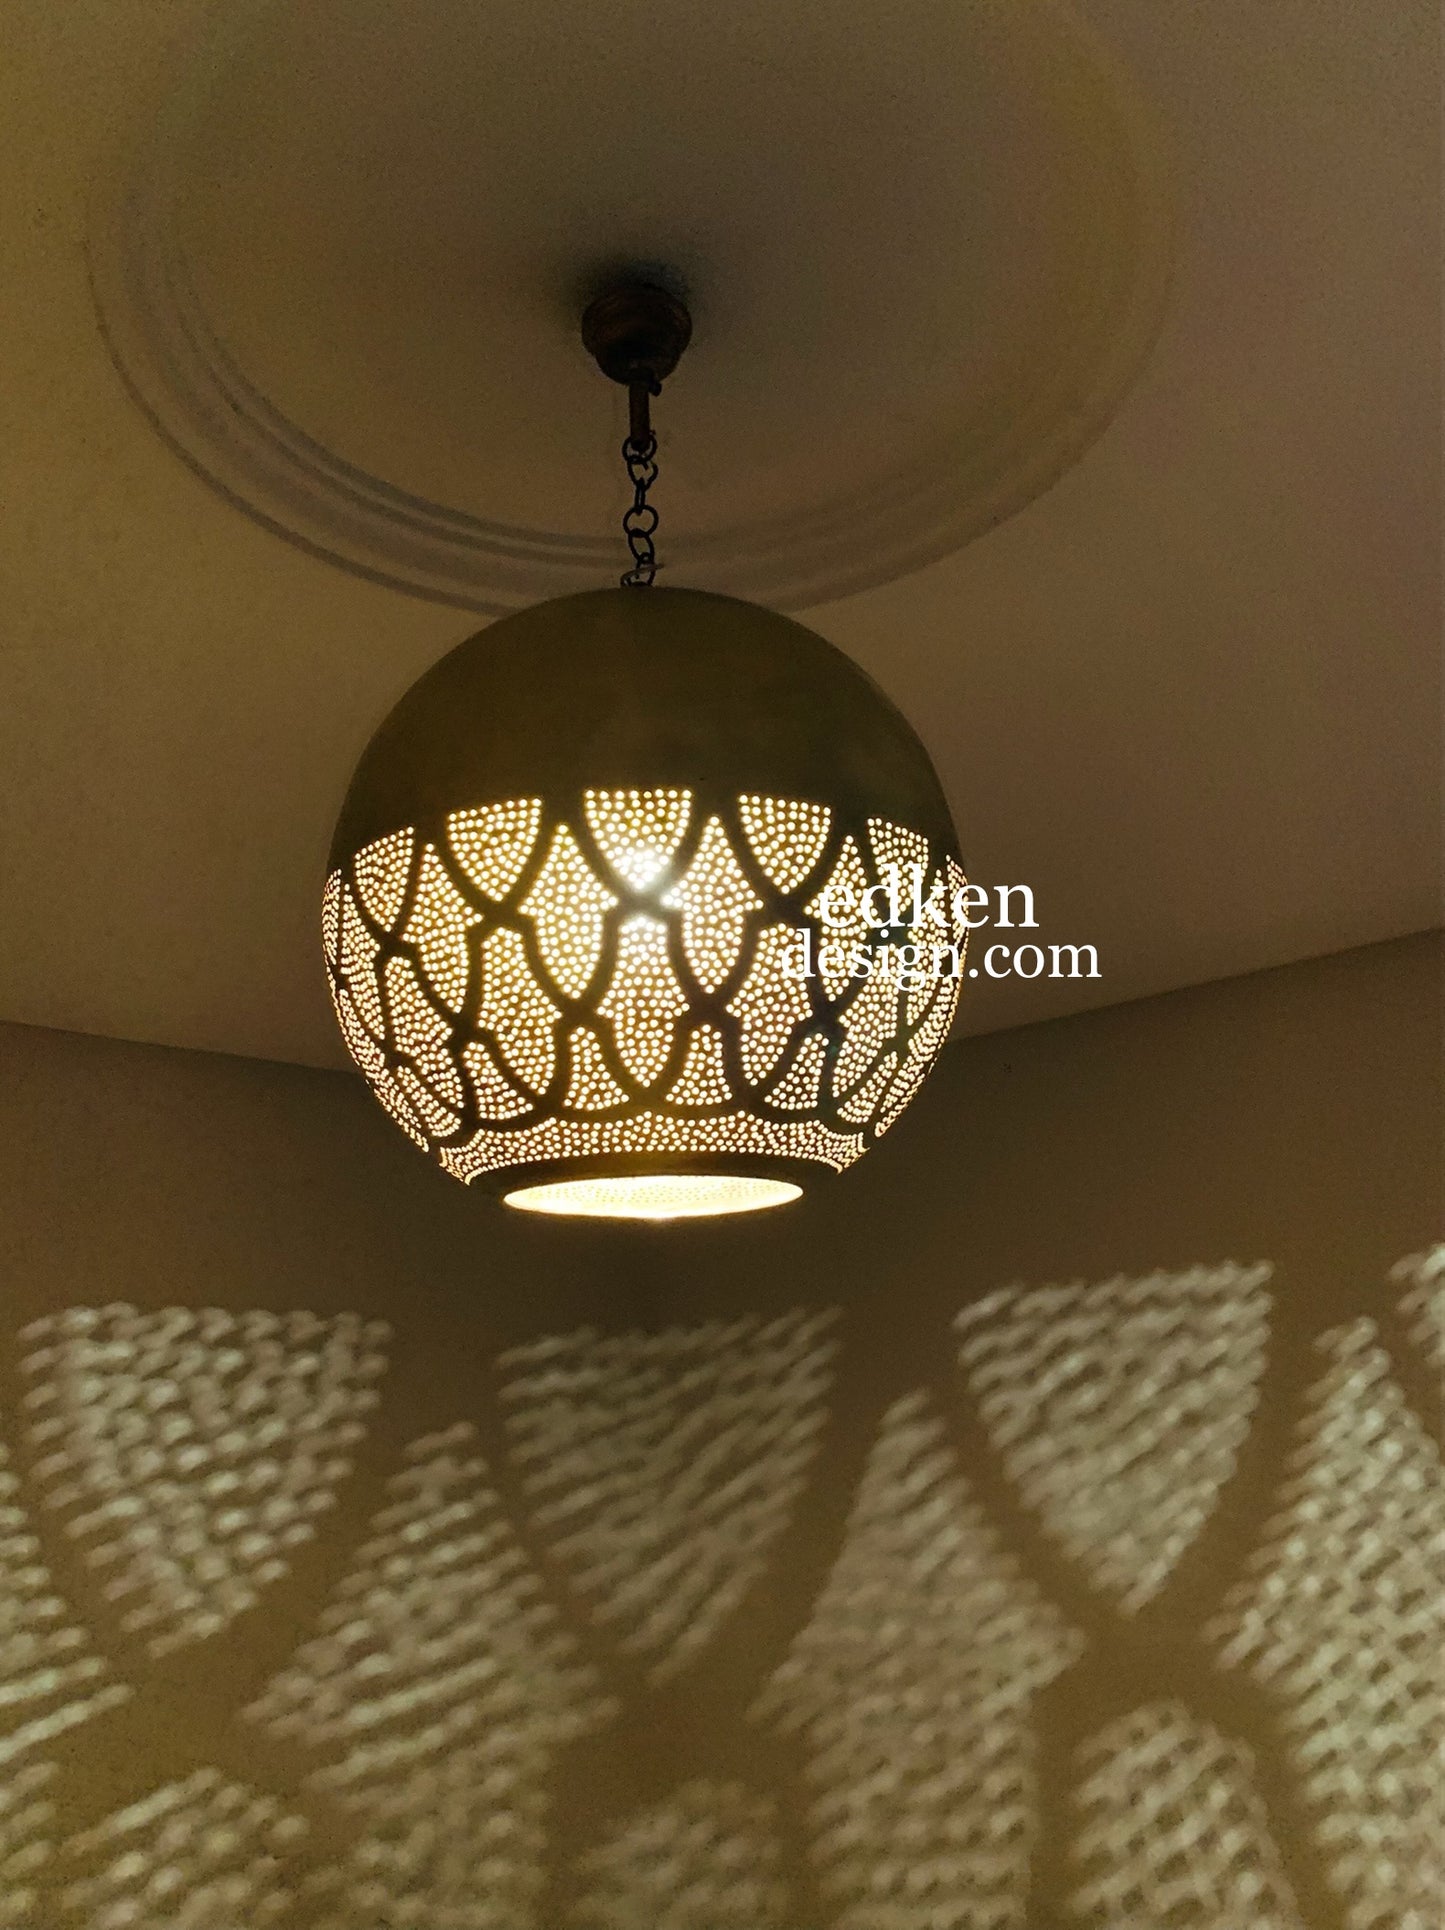 EDKEN LIGHTS - Morocco Ceiling Lamp Shades Globe Shape Fixture Ball pierced Hanging Brass Lights 2